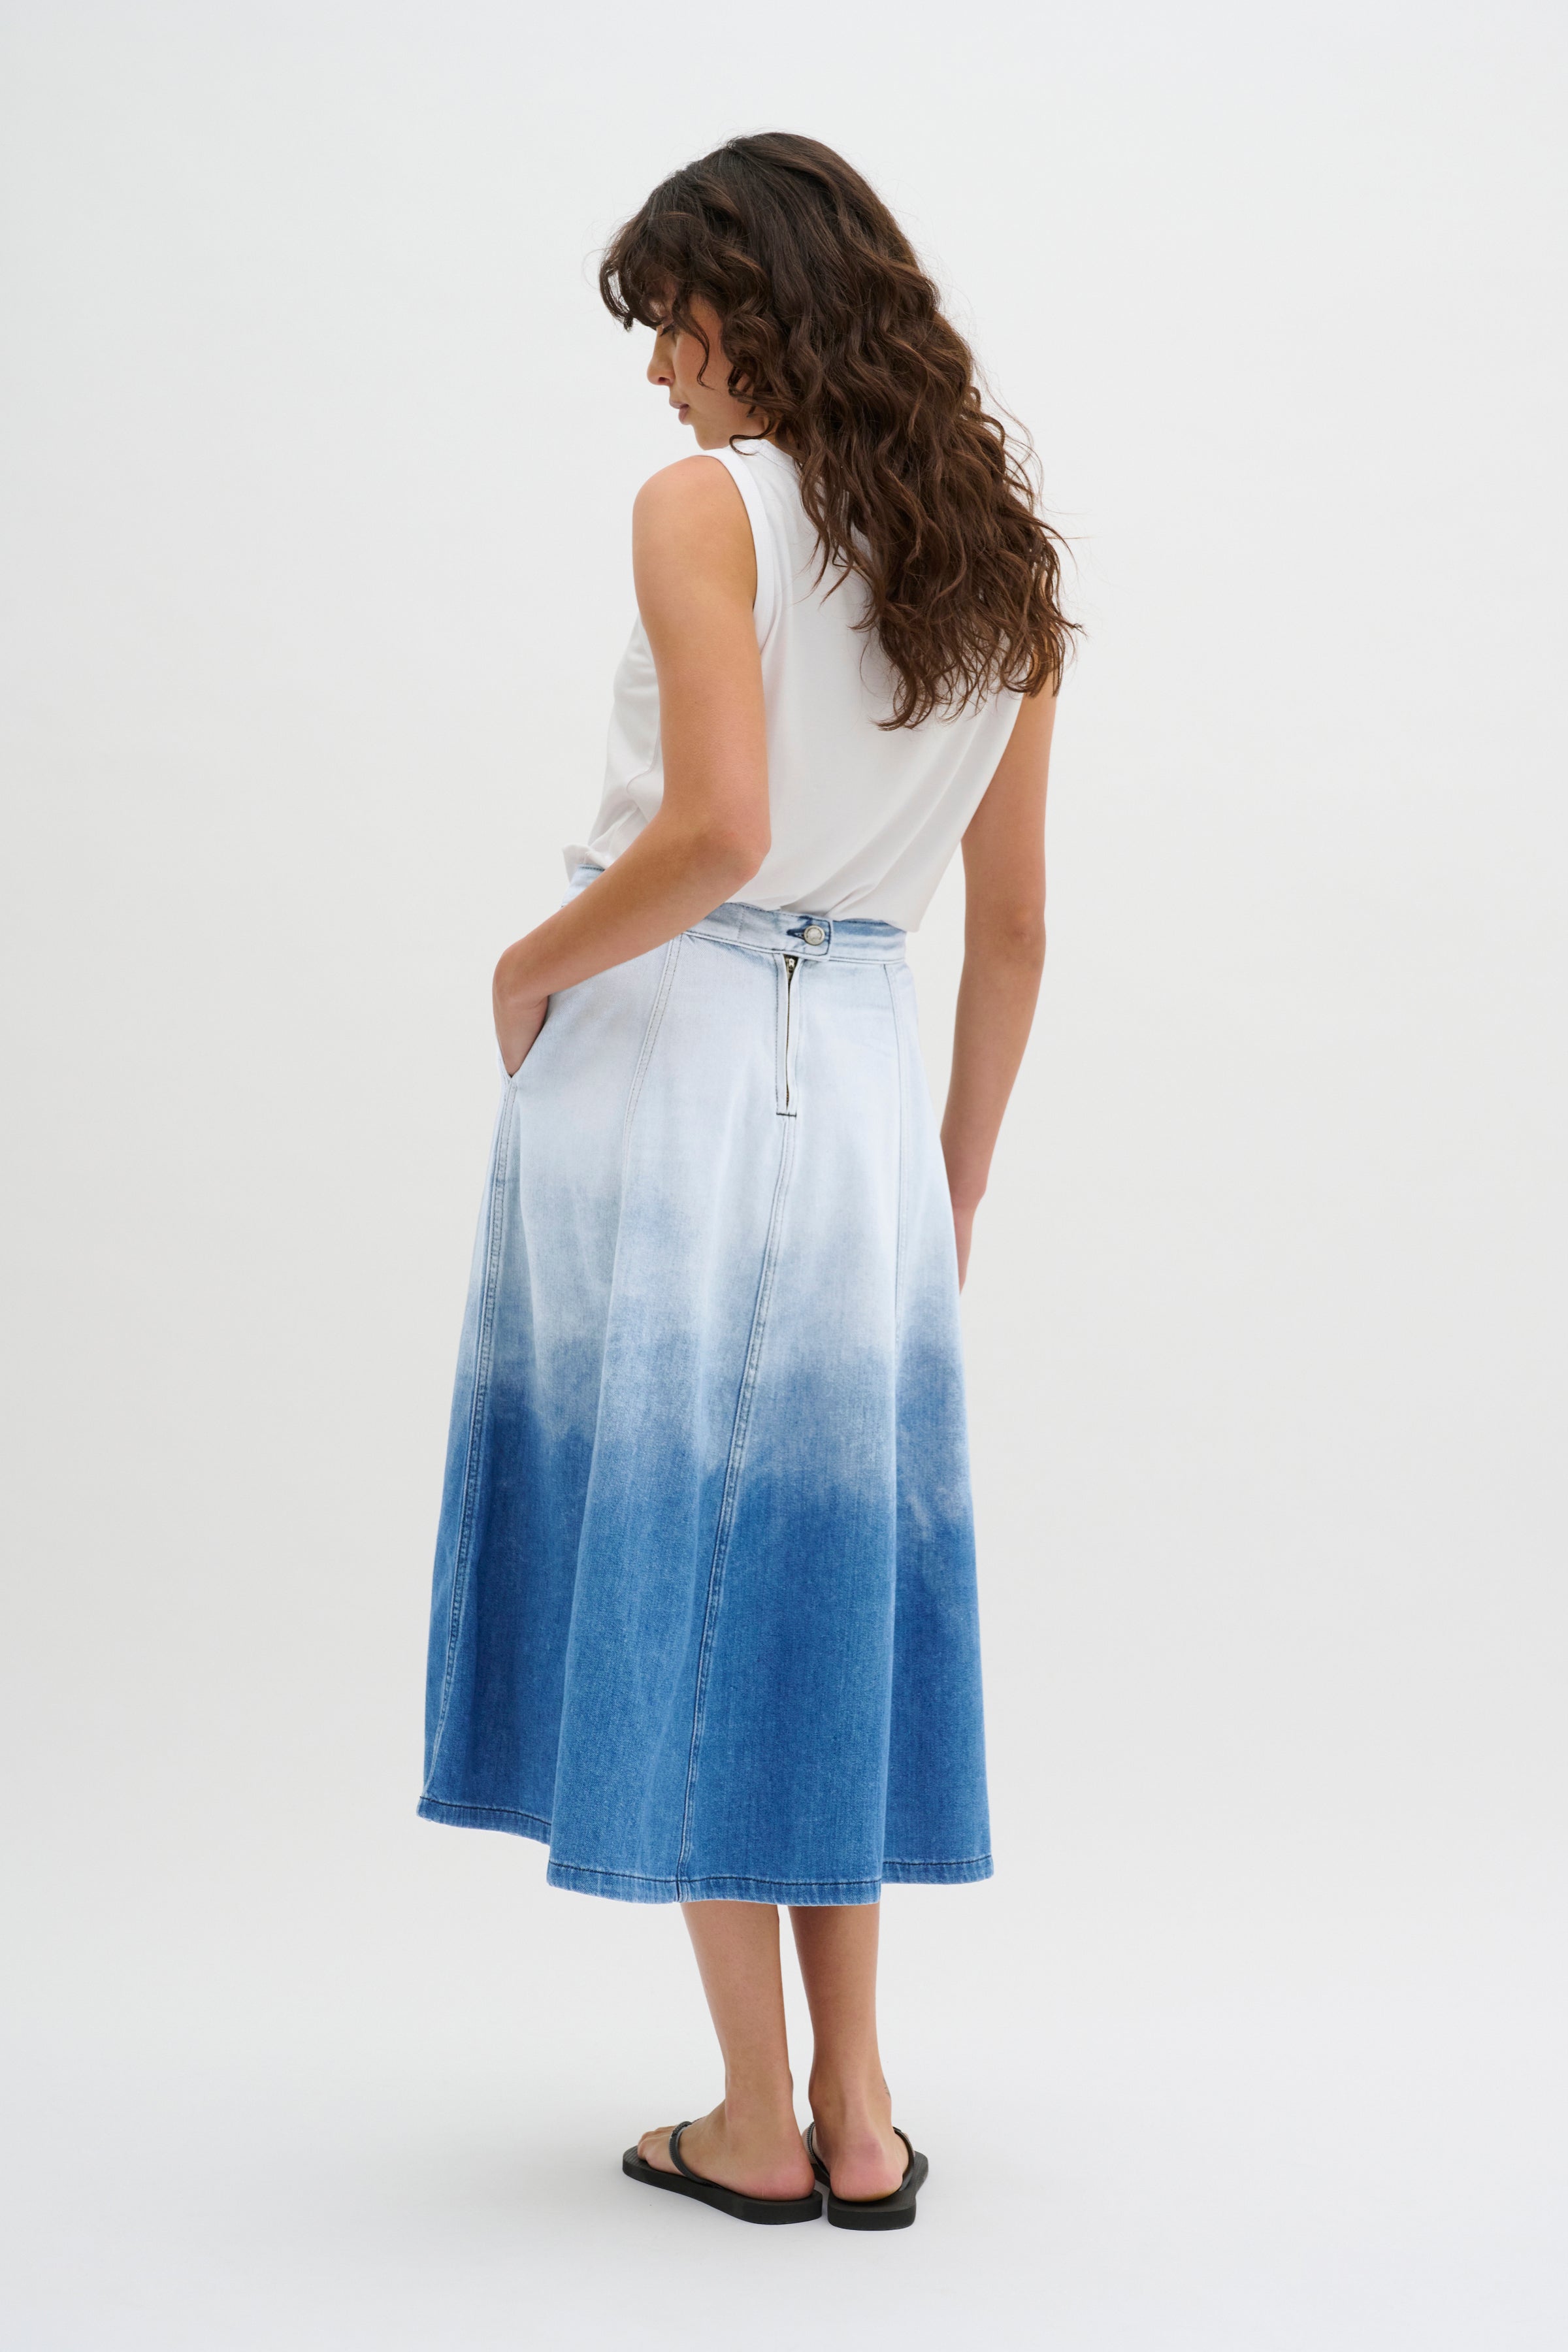 My Essential Wardrobe Malo Skirt, Dip Dye